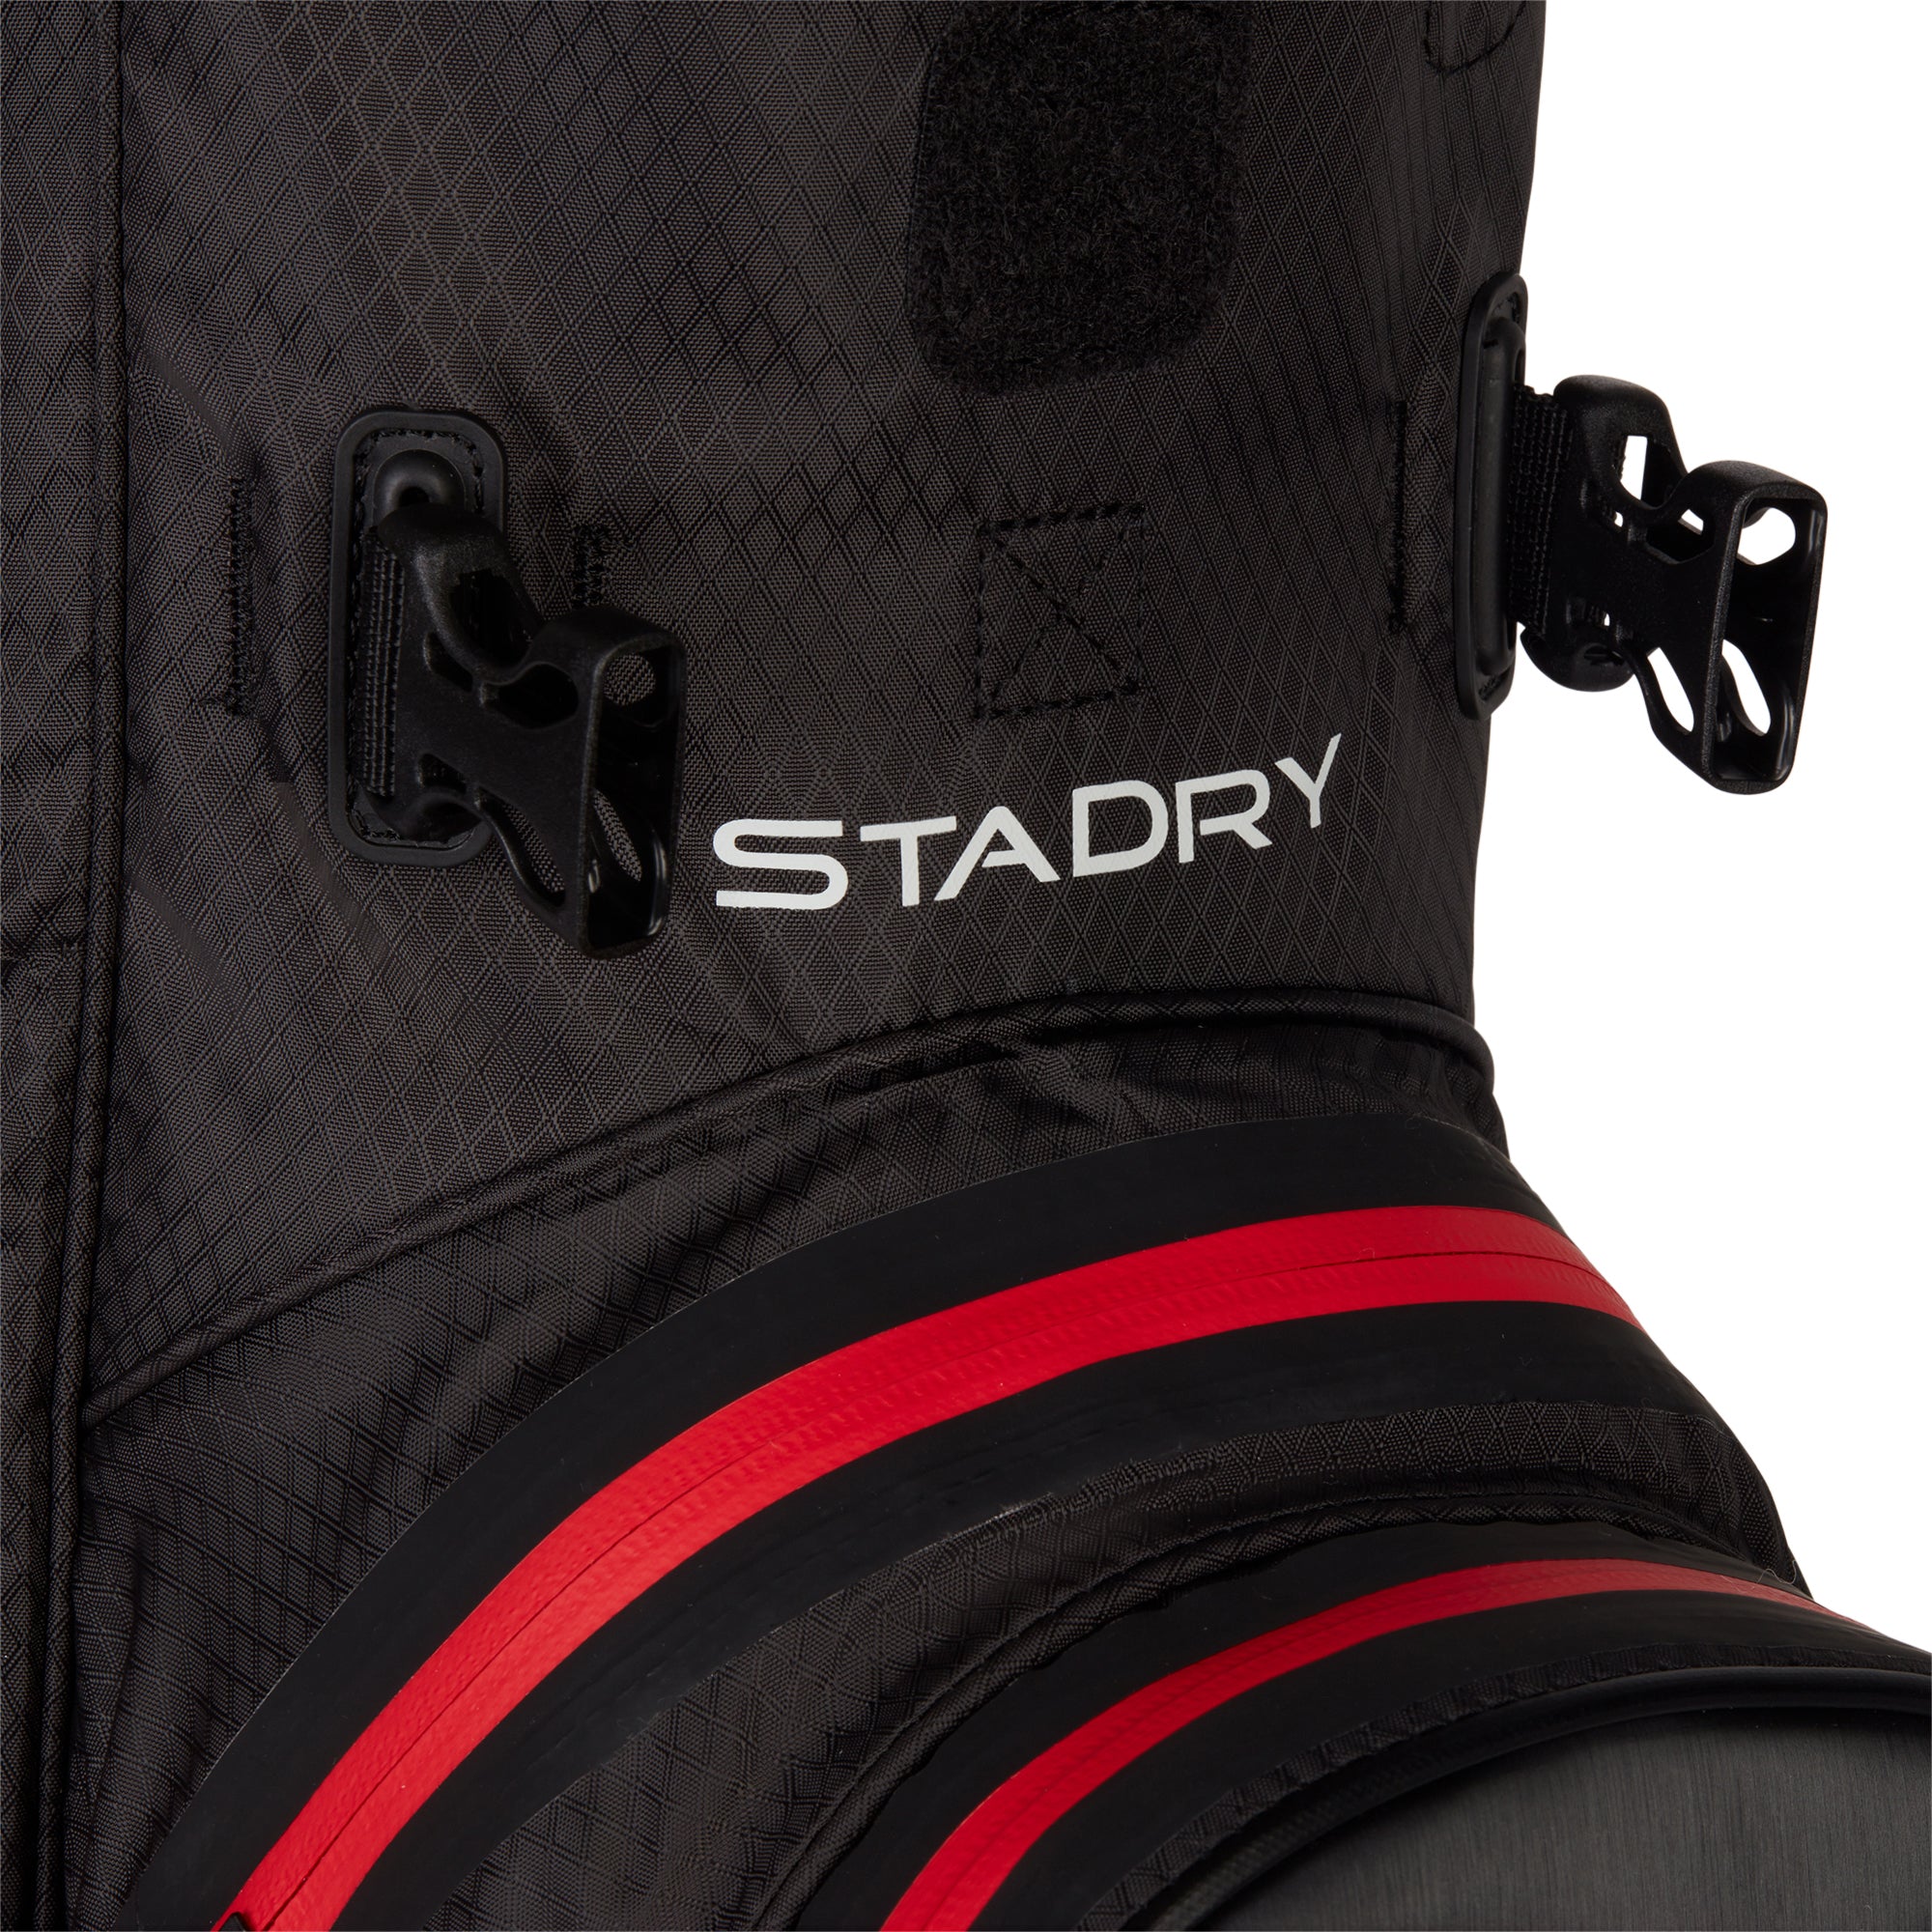 Titleist Players 4+ StaDry Stand Golf Bag